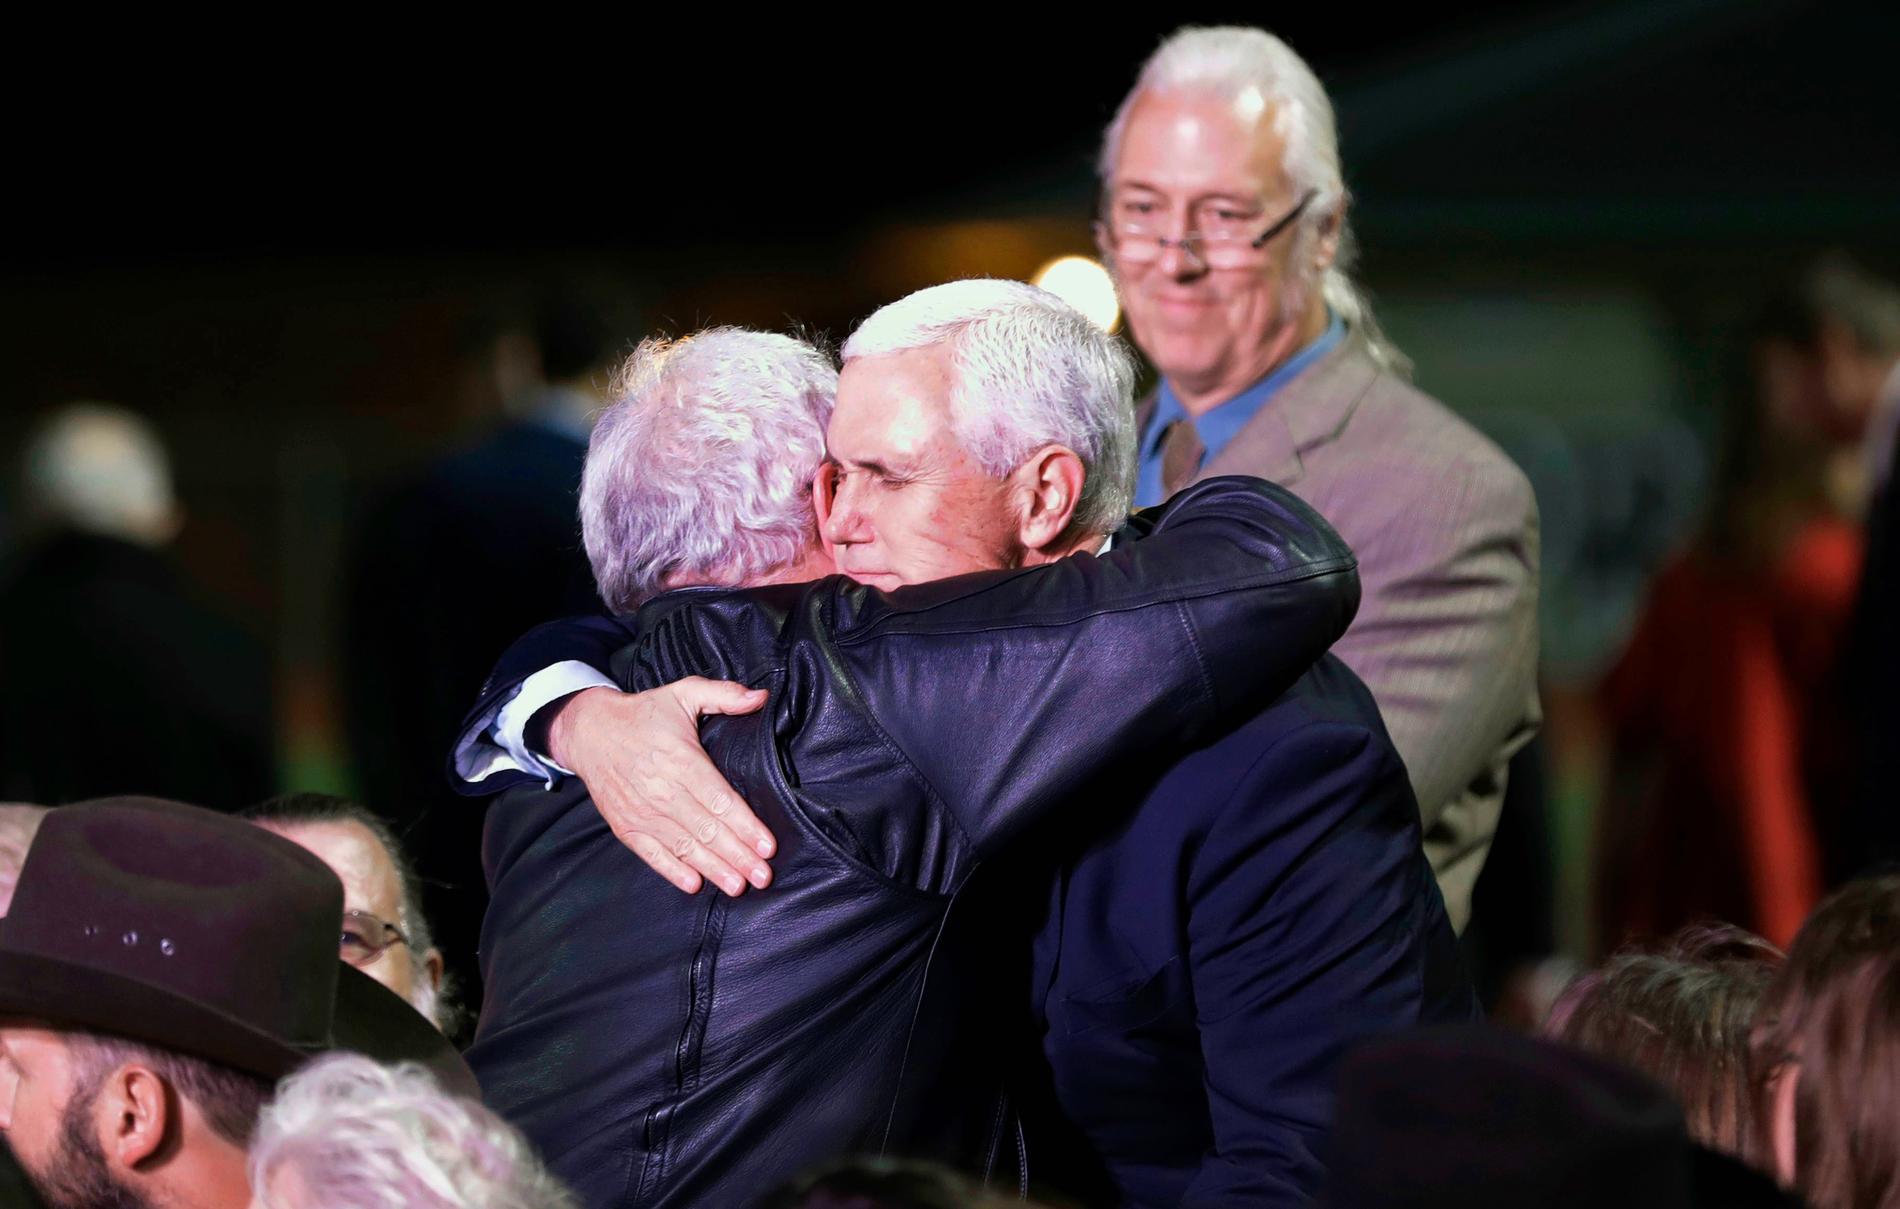 Vicepresident Mike Pence kramar om Stephen Willeford, som sköt gärningsmannen i Sutherland Springs.